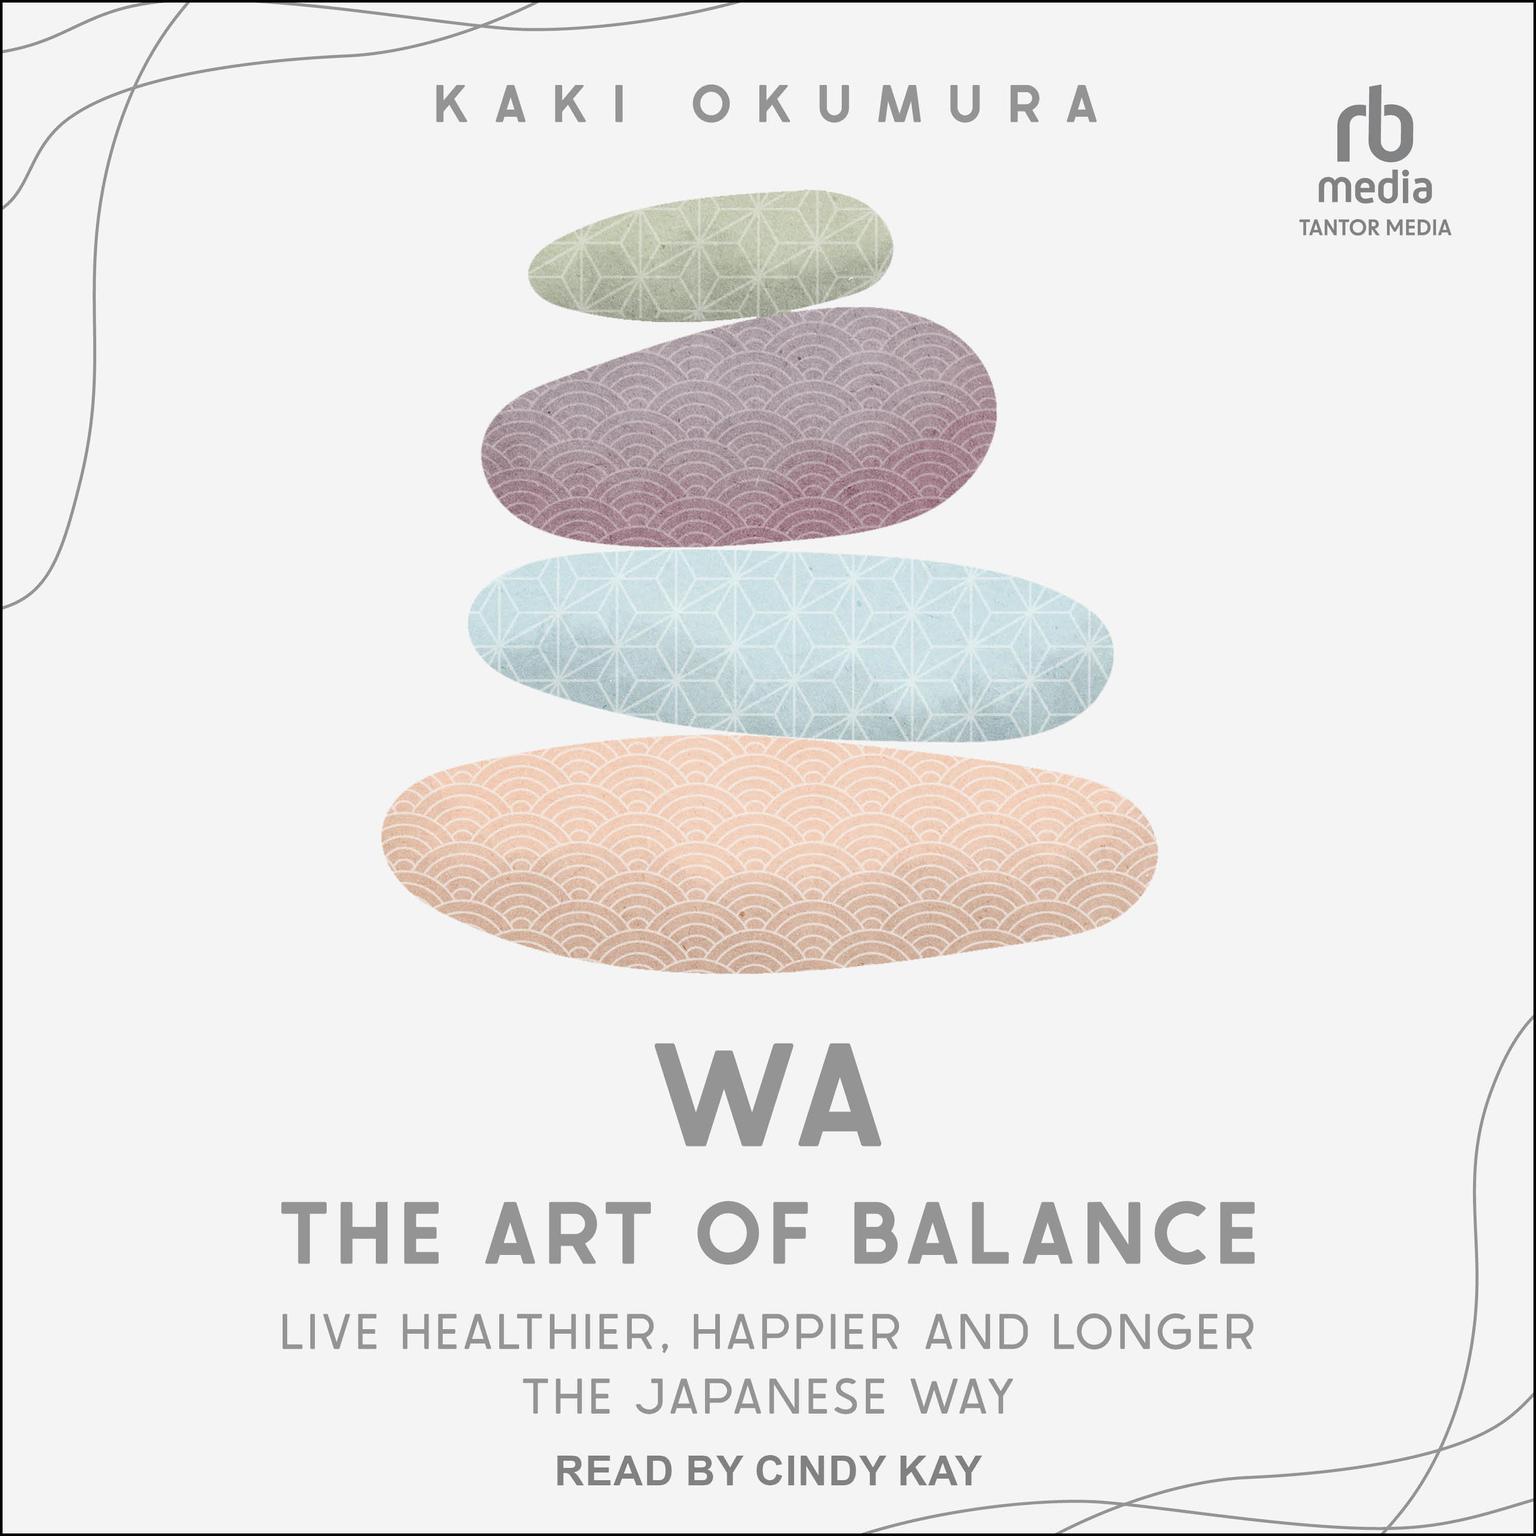 Wa - The Art of Balance: Live Healthier, Happier and Longer the Japanese Way Audiobook, by Kaki Okumura